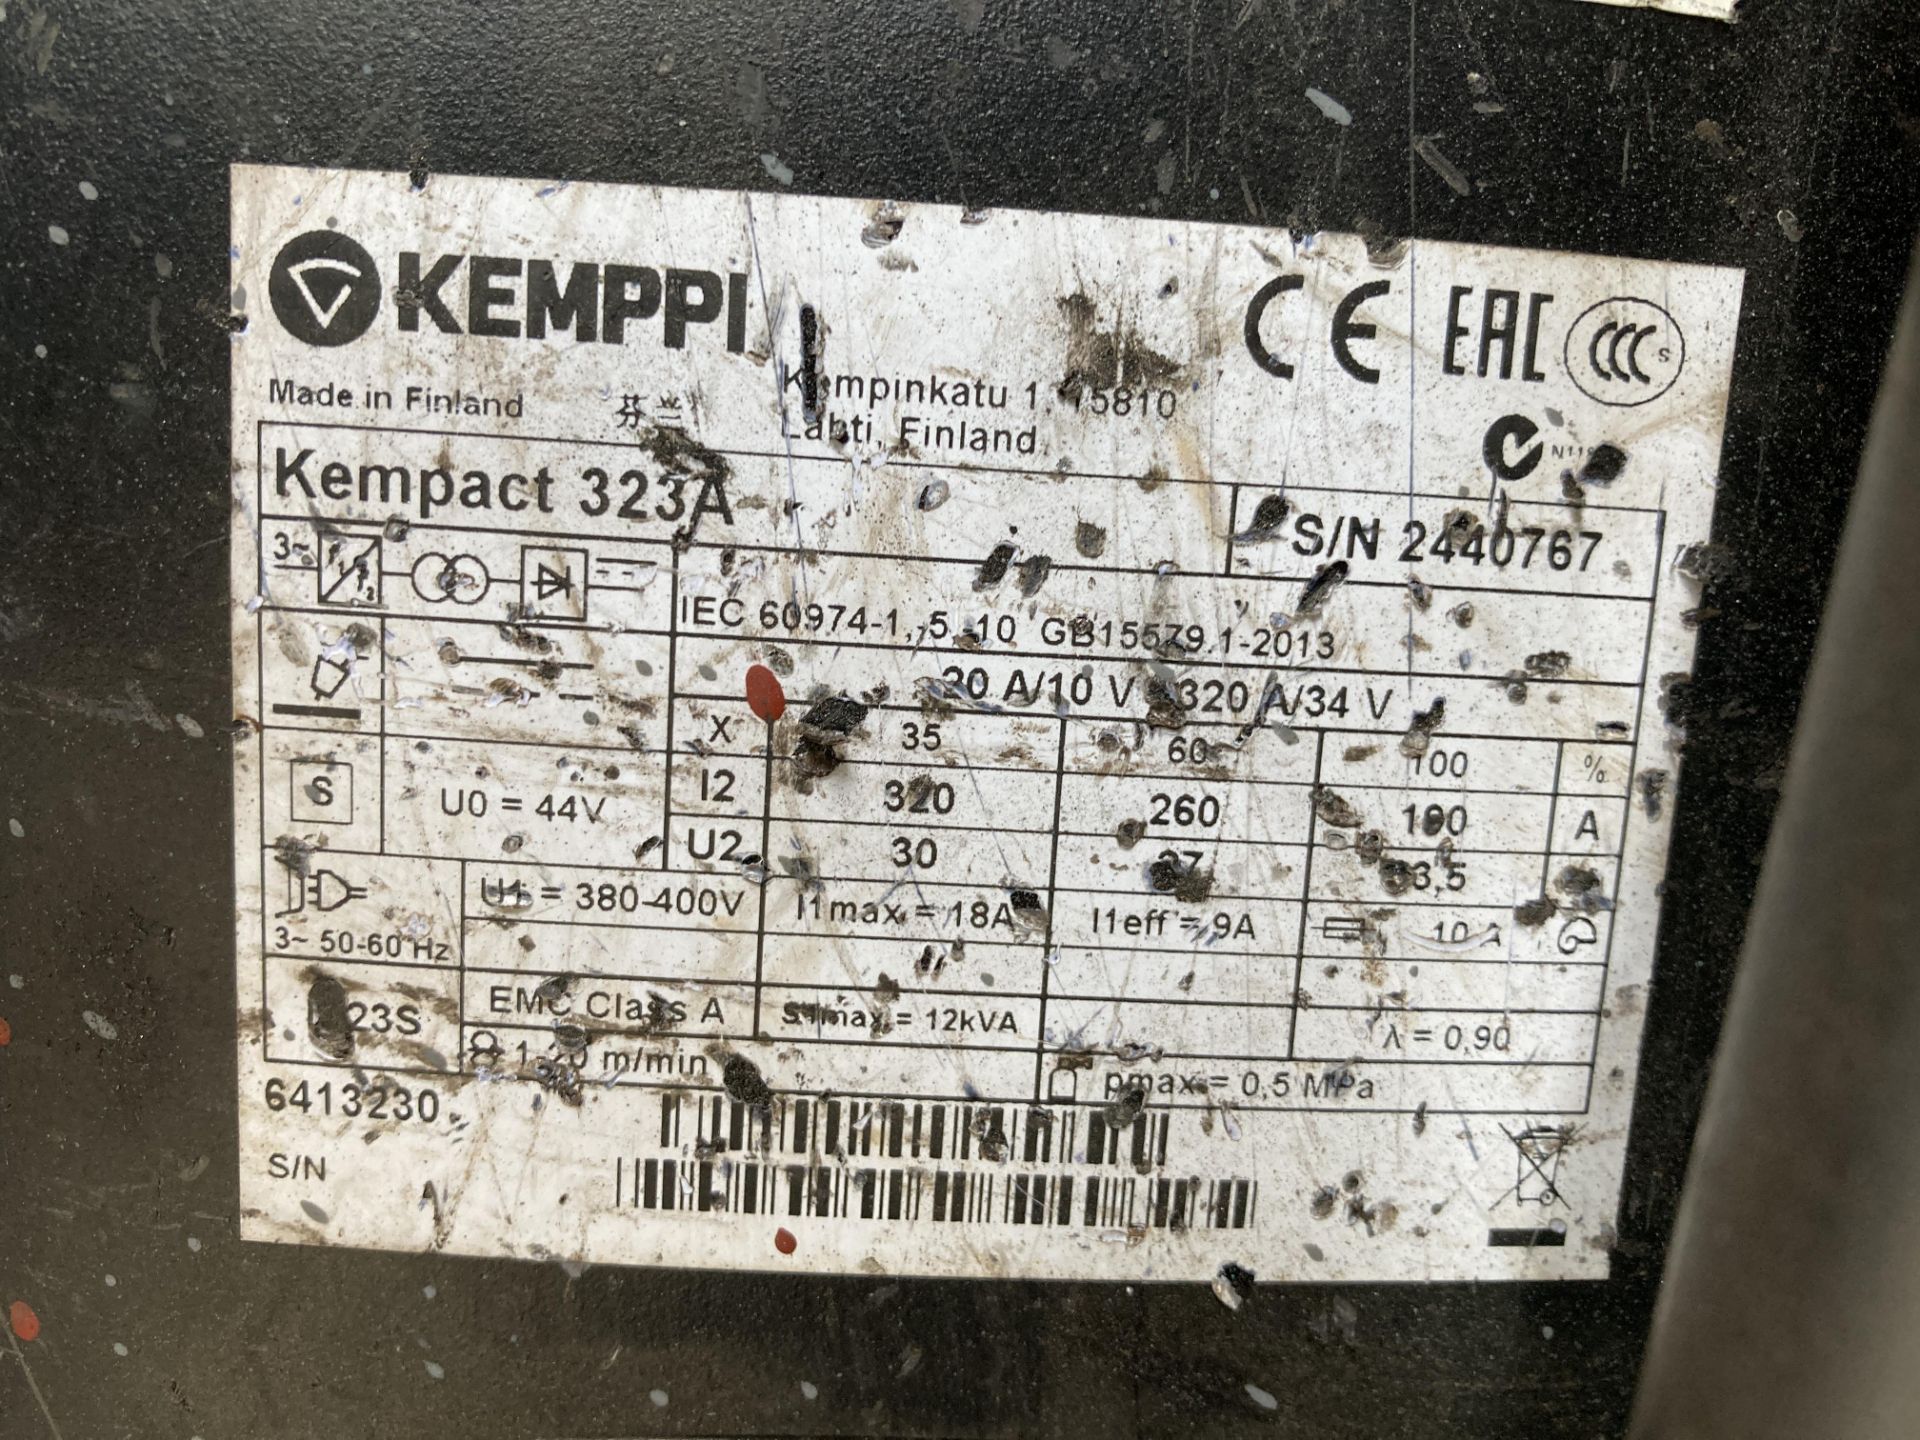 Kemppi Kempact 323A mig welding set - Image 4 of 5